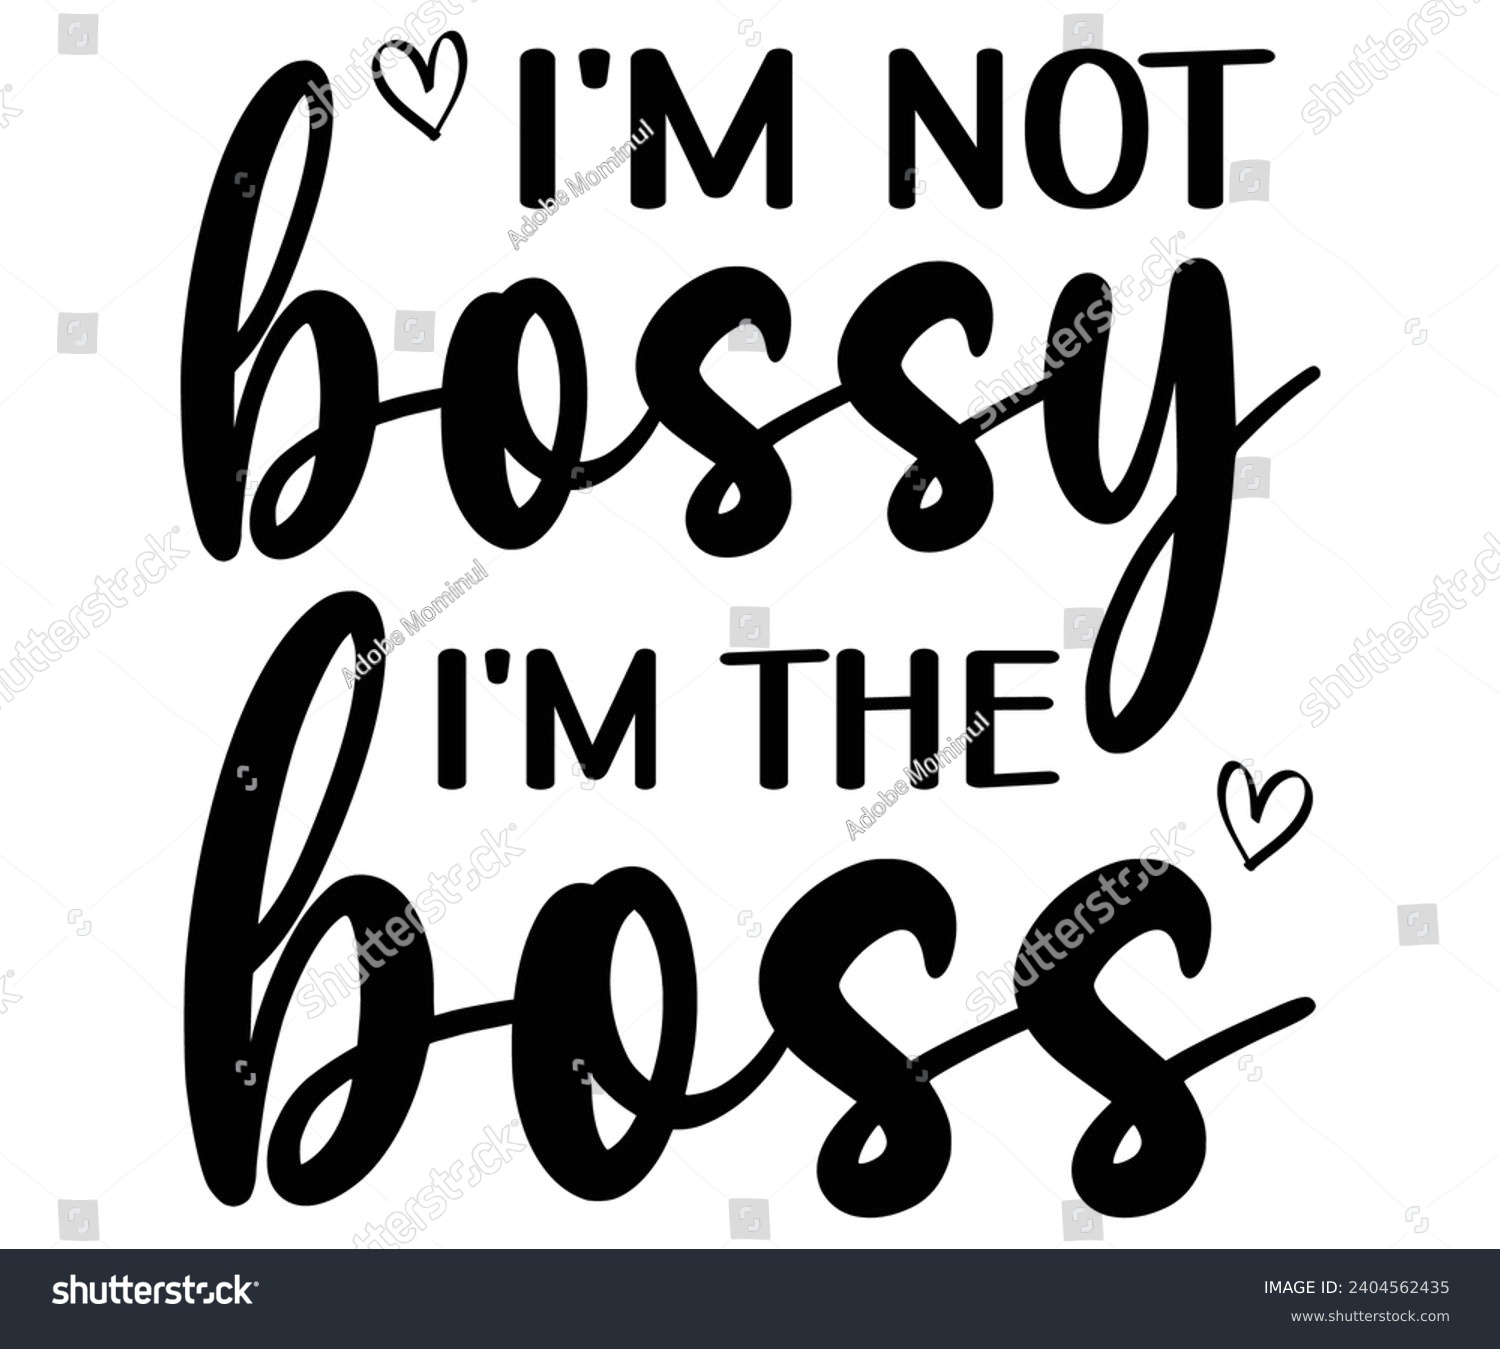 SVG of I'm Not Bossy I'm the Boss Svg,Happy Boss Day svg,Boss Saying Quotes,Boss Day T-shirt,Gift for Boss,Great Jobs,Happy Bosses Day t-shirt,Girl Boss Shirt,Motivational Boss,Cut File,Circut  svg